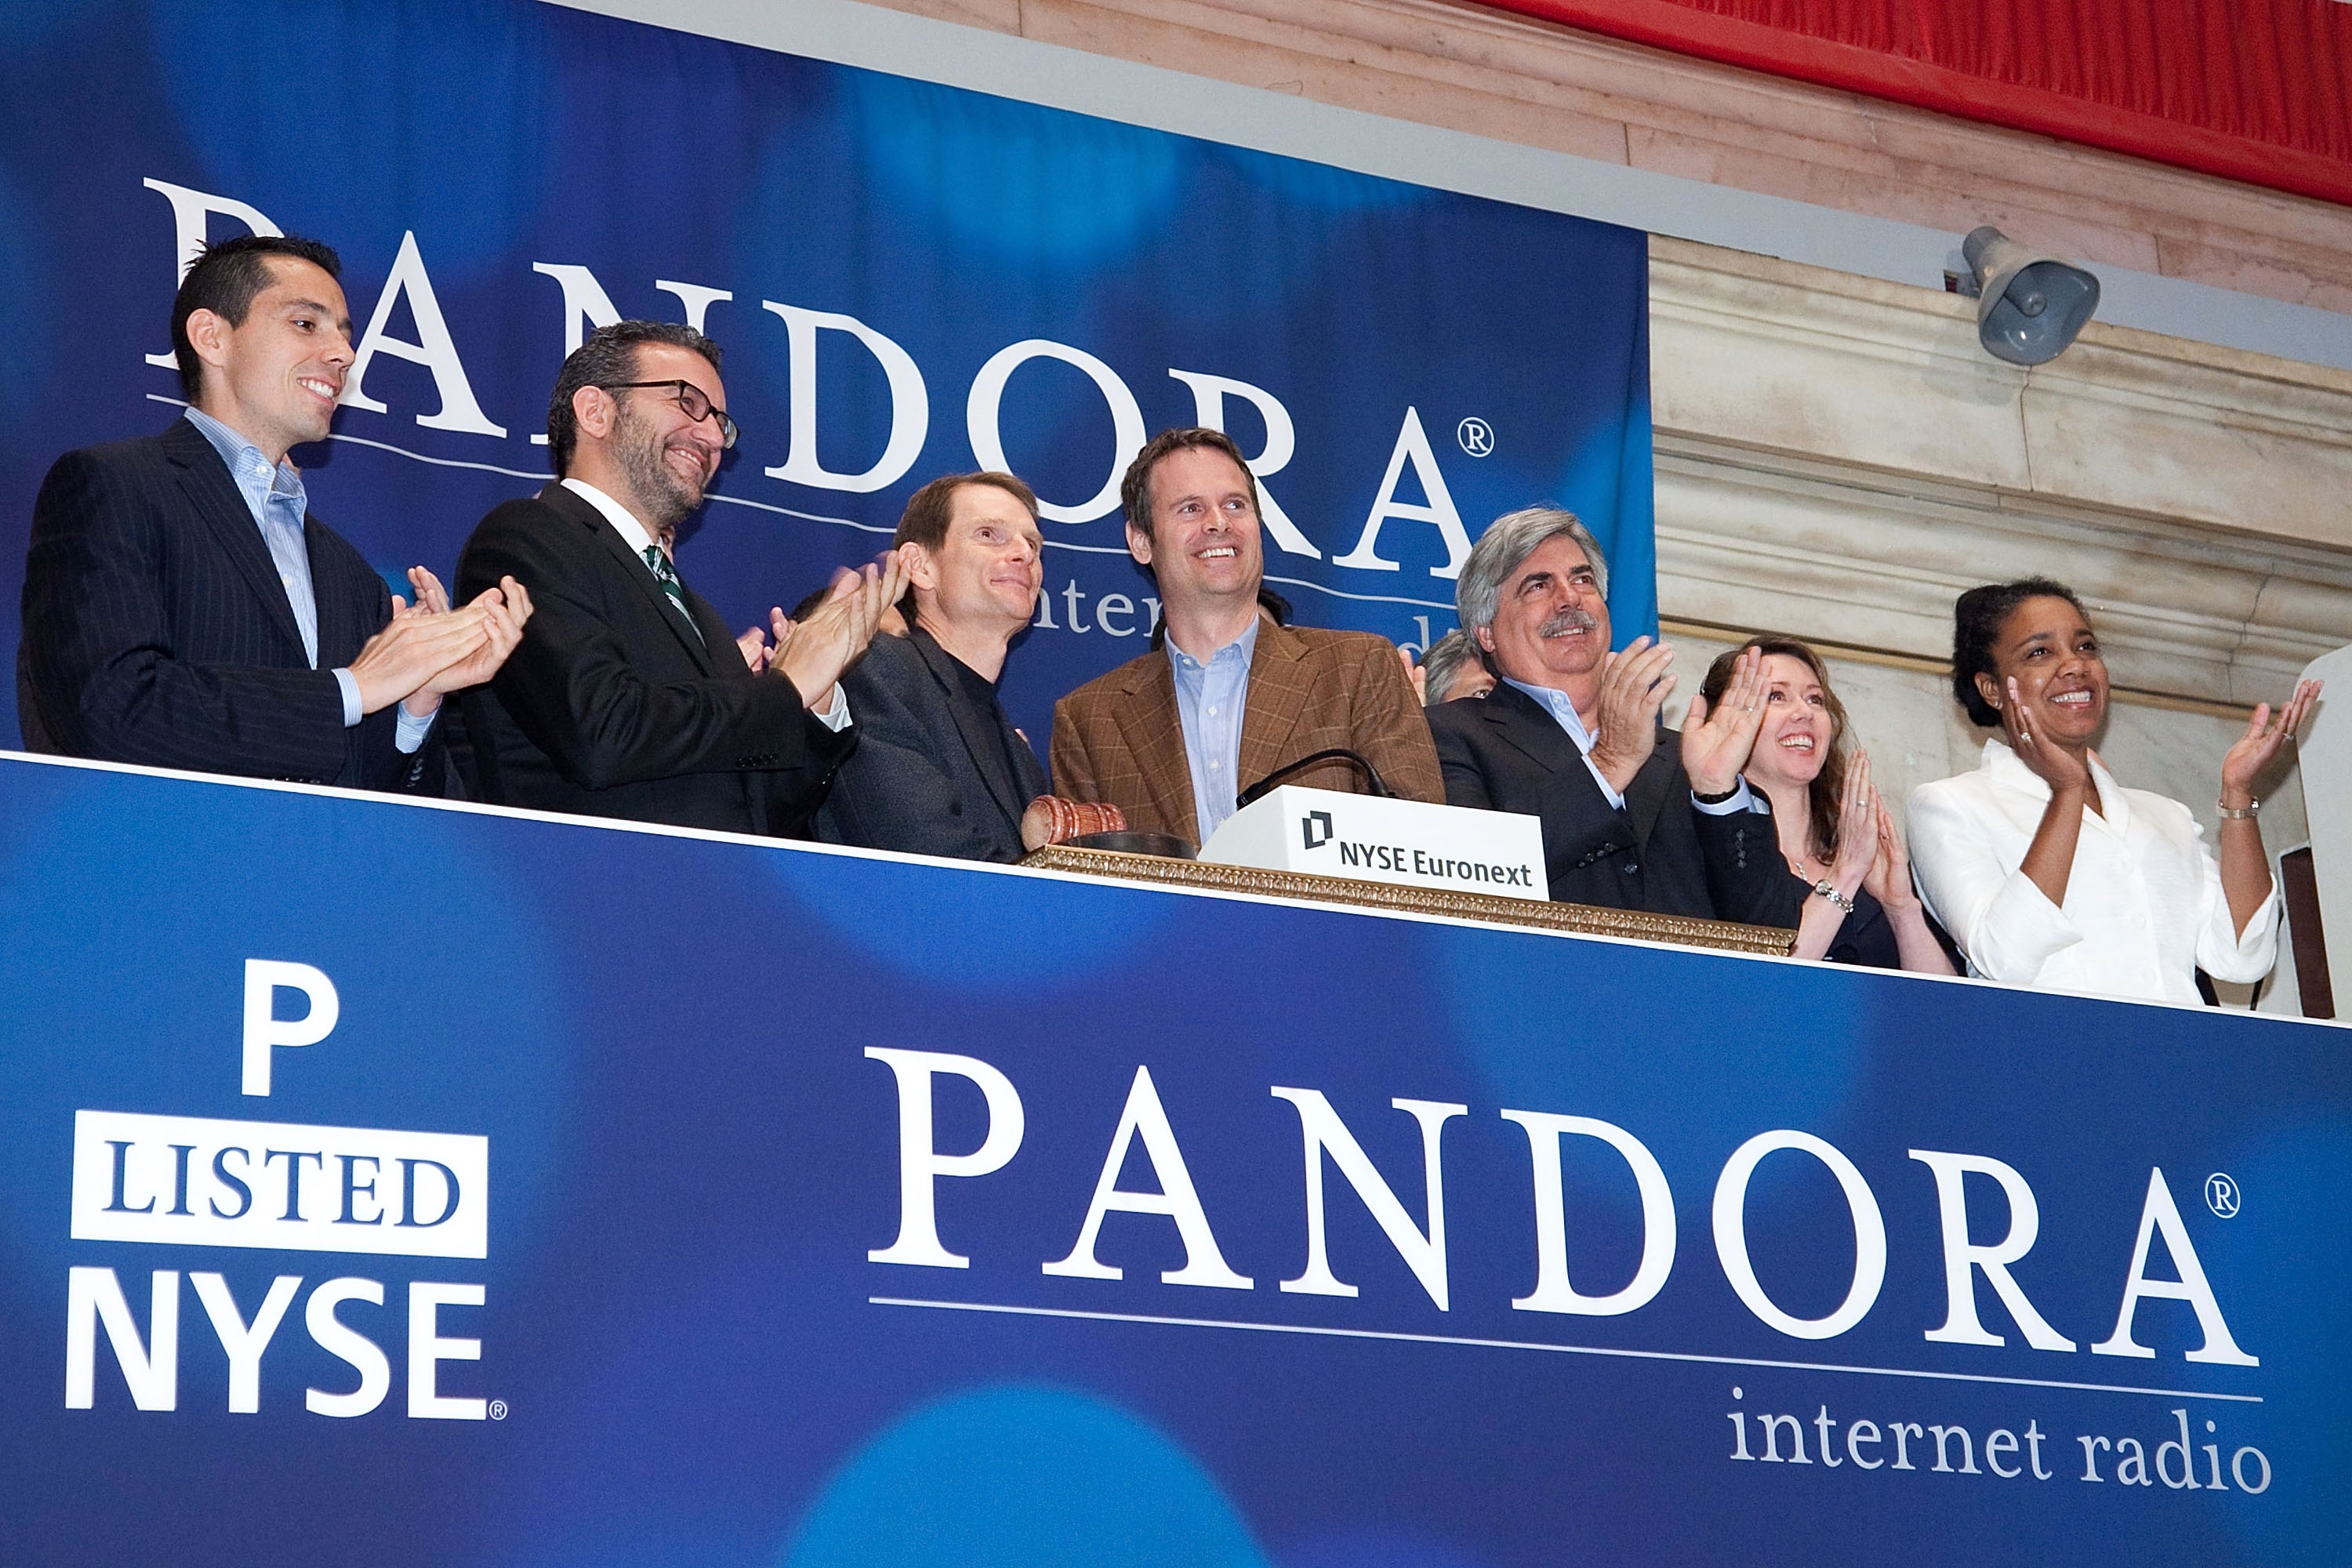 Will Apple Challenge Pandora?